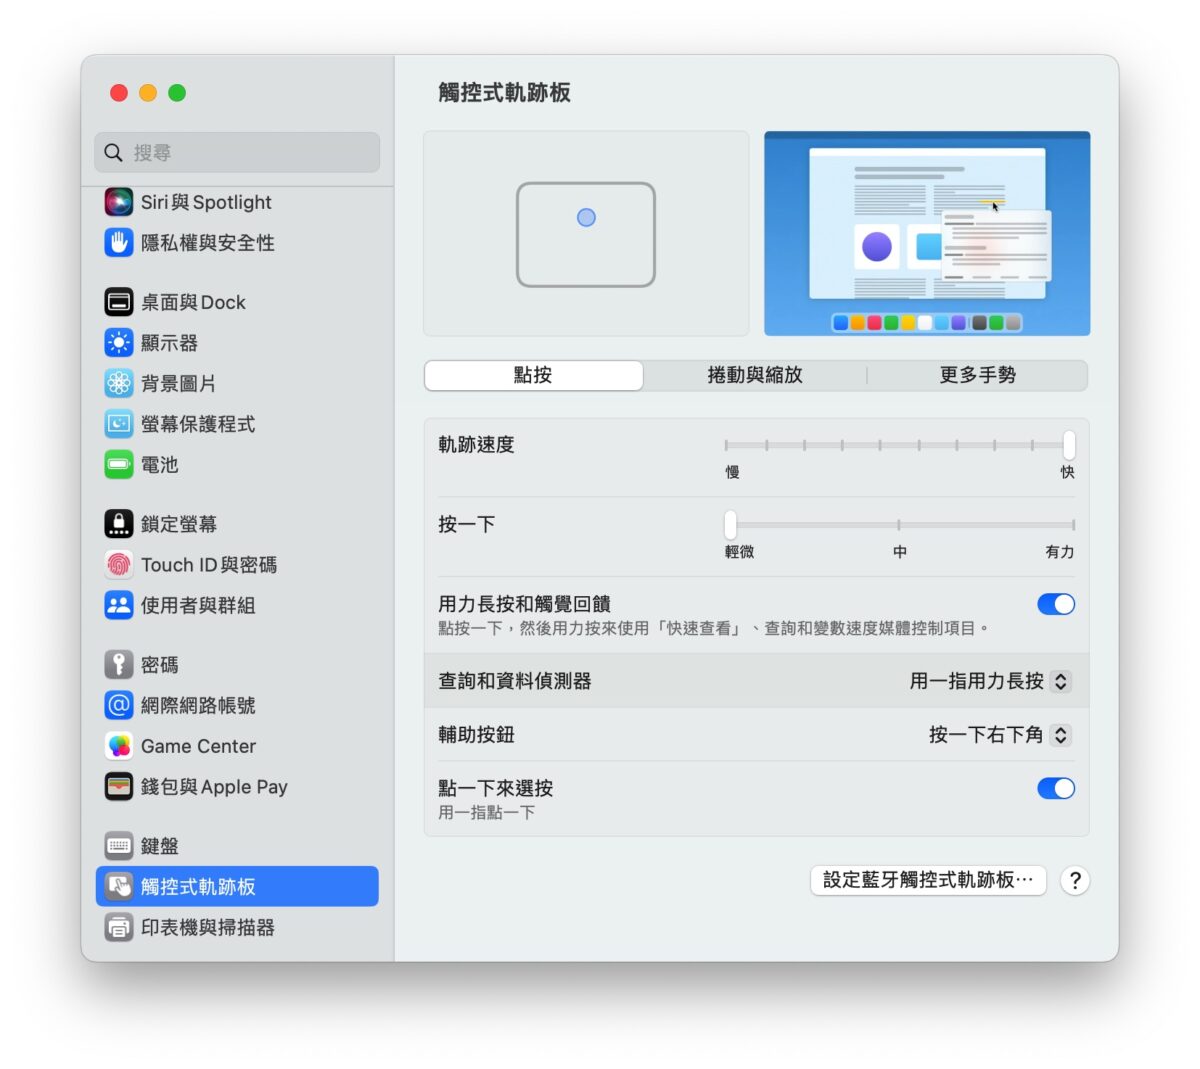 Mac MacBook macOS Mac 新手 推薦設定 功能設定